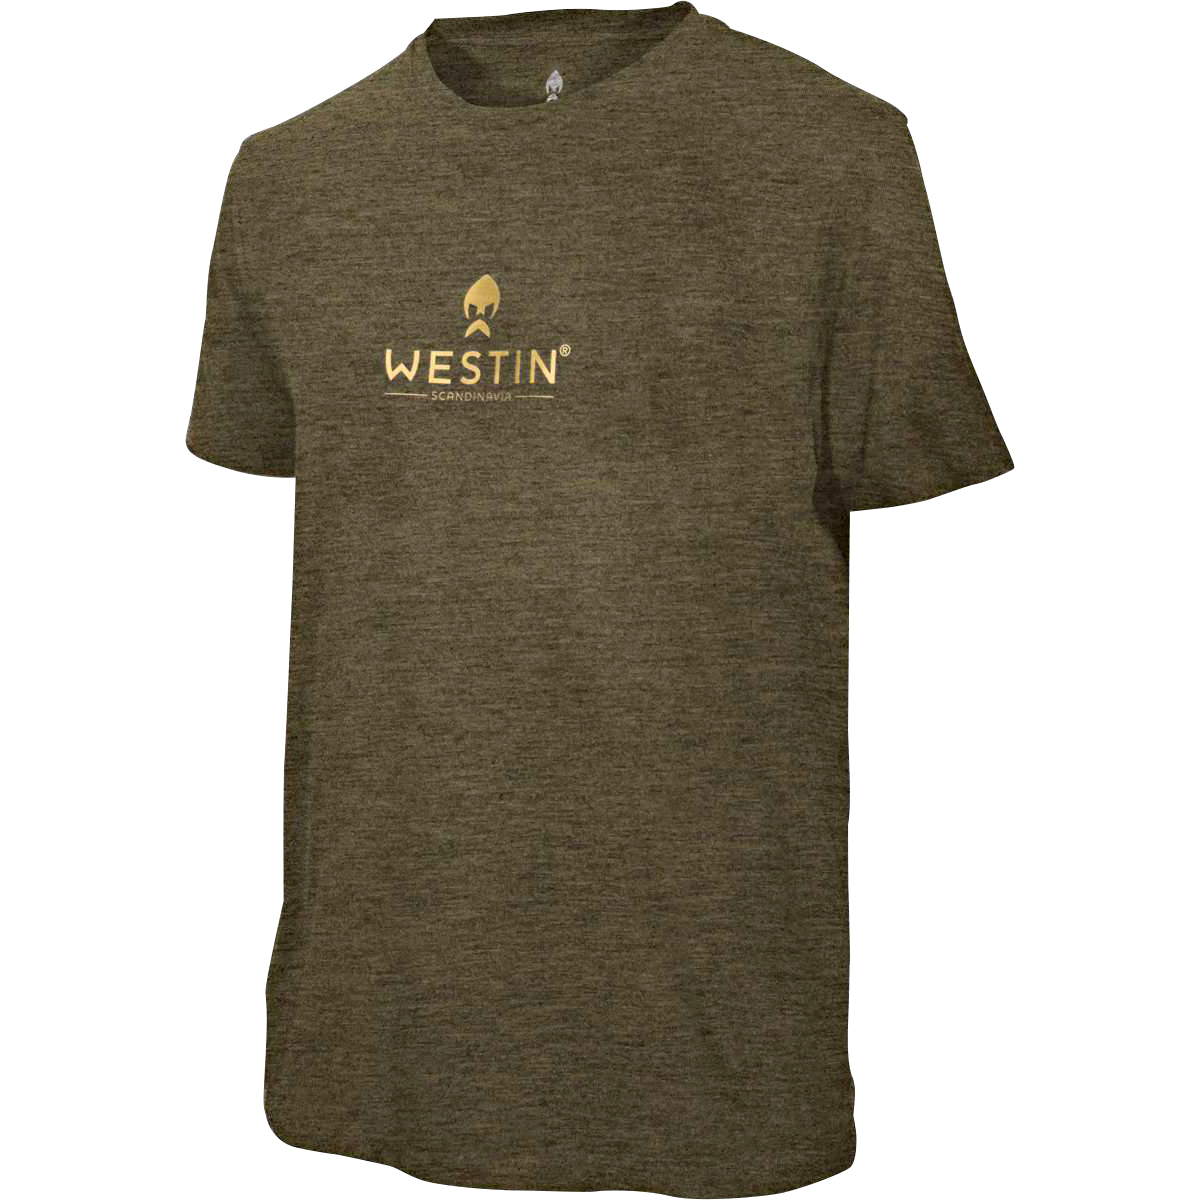 Westin Men's Style T-Shirt 